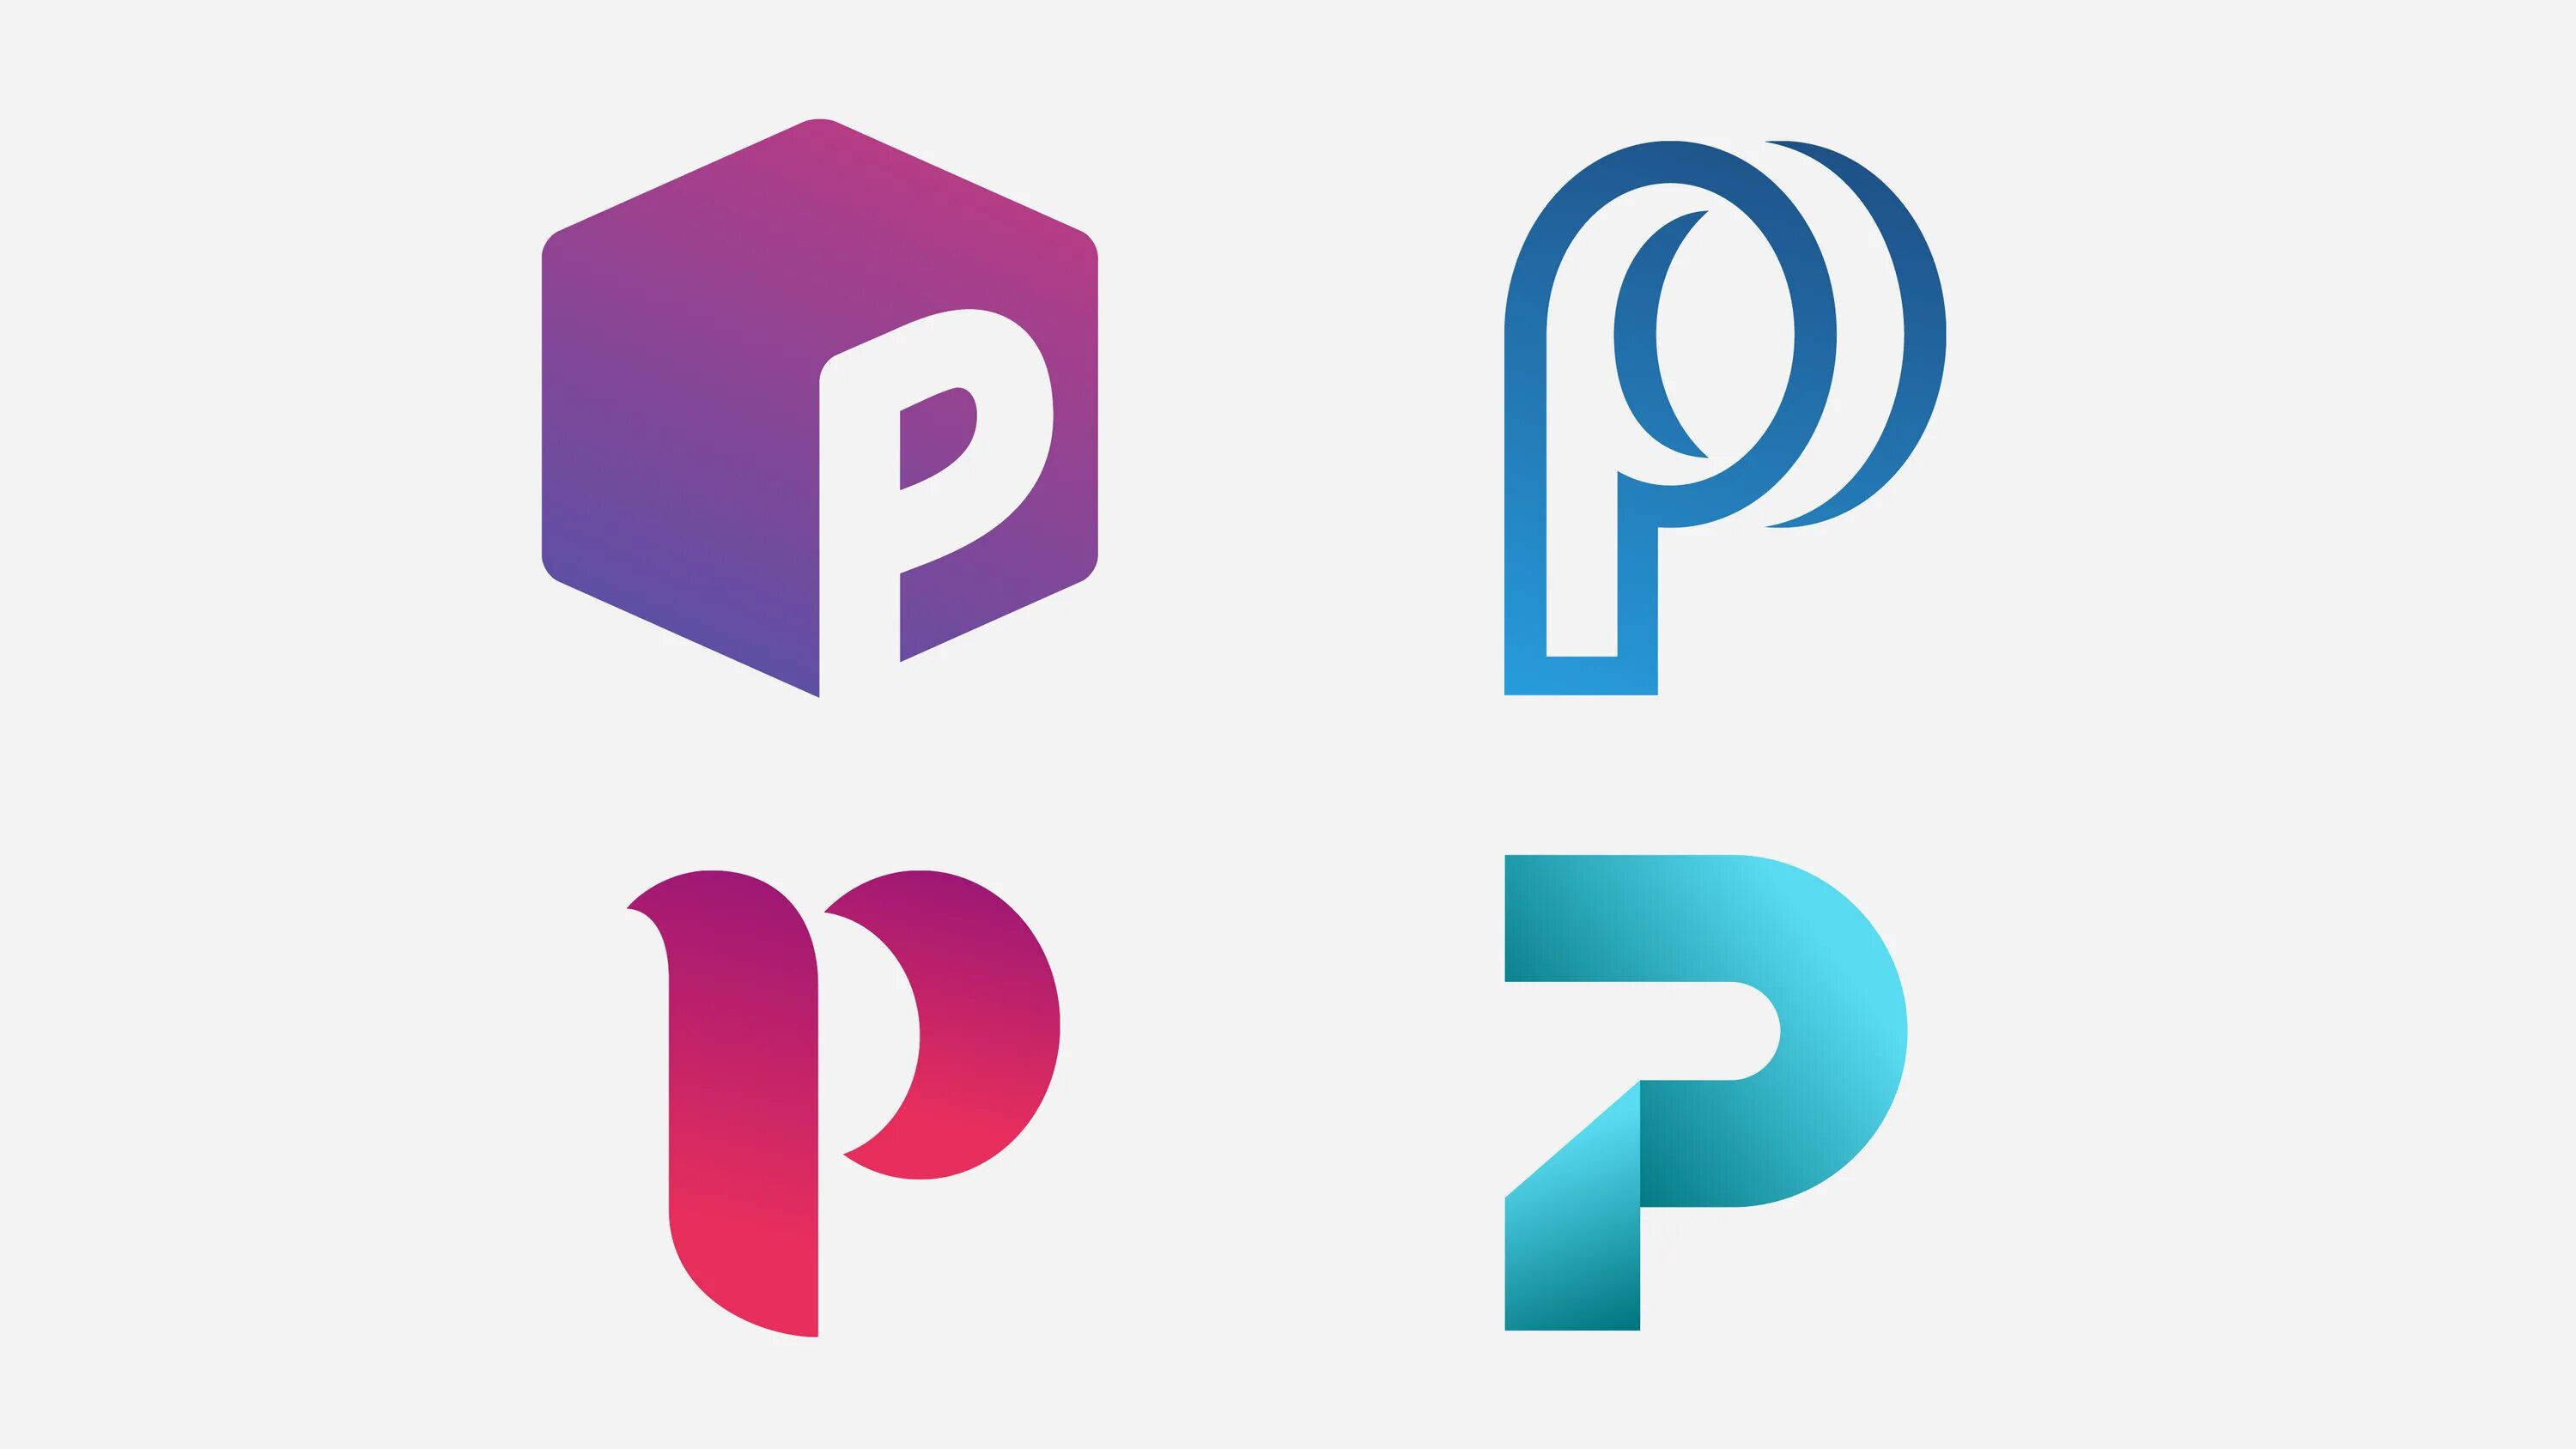 Свободные логотипы. P2p логотип. P.S. картинка. 4 P logo.